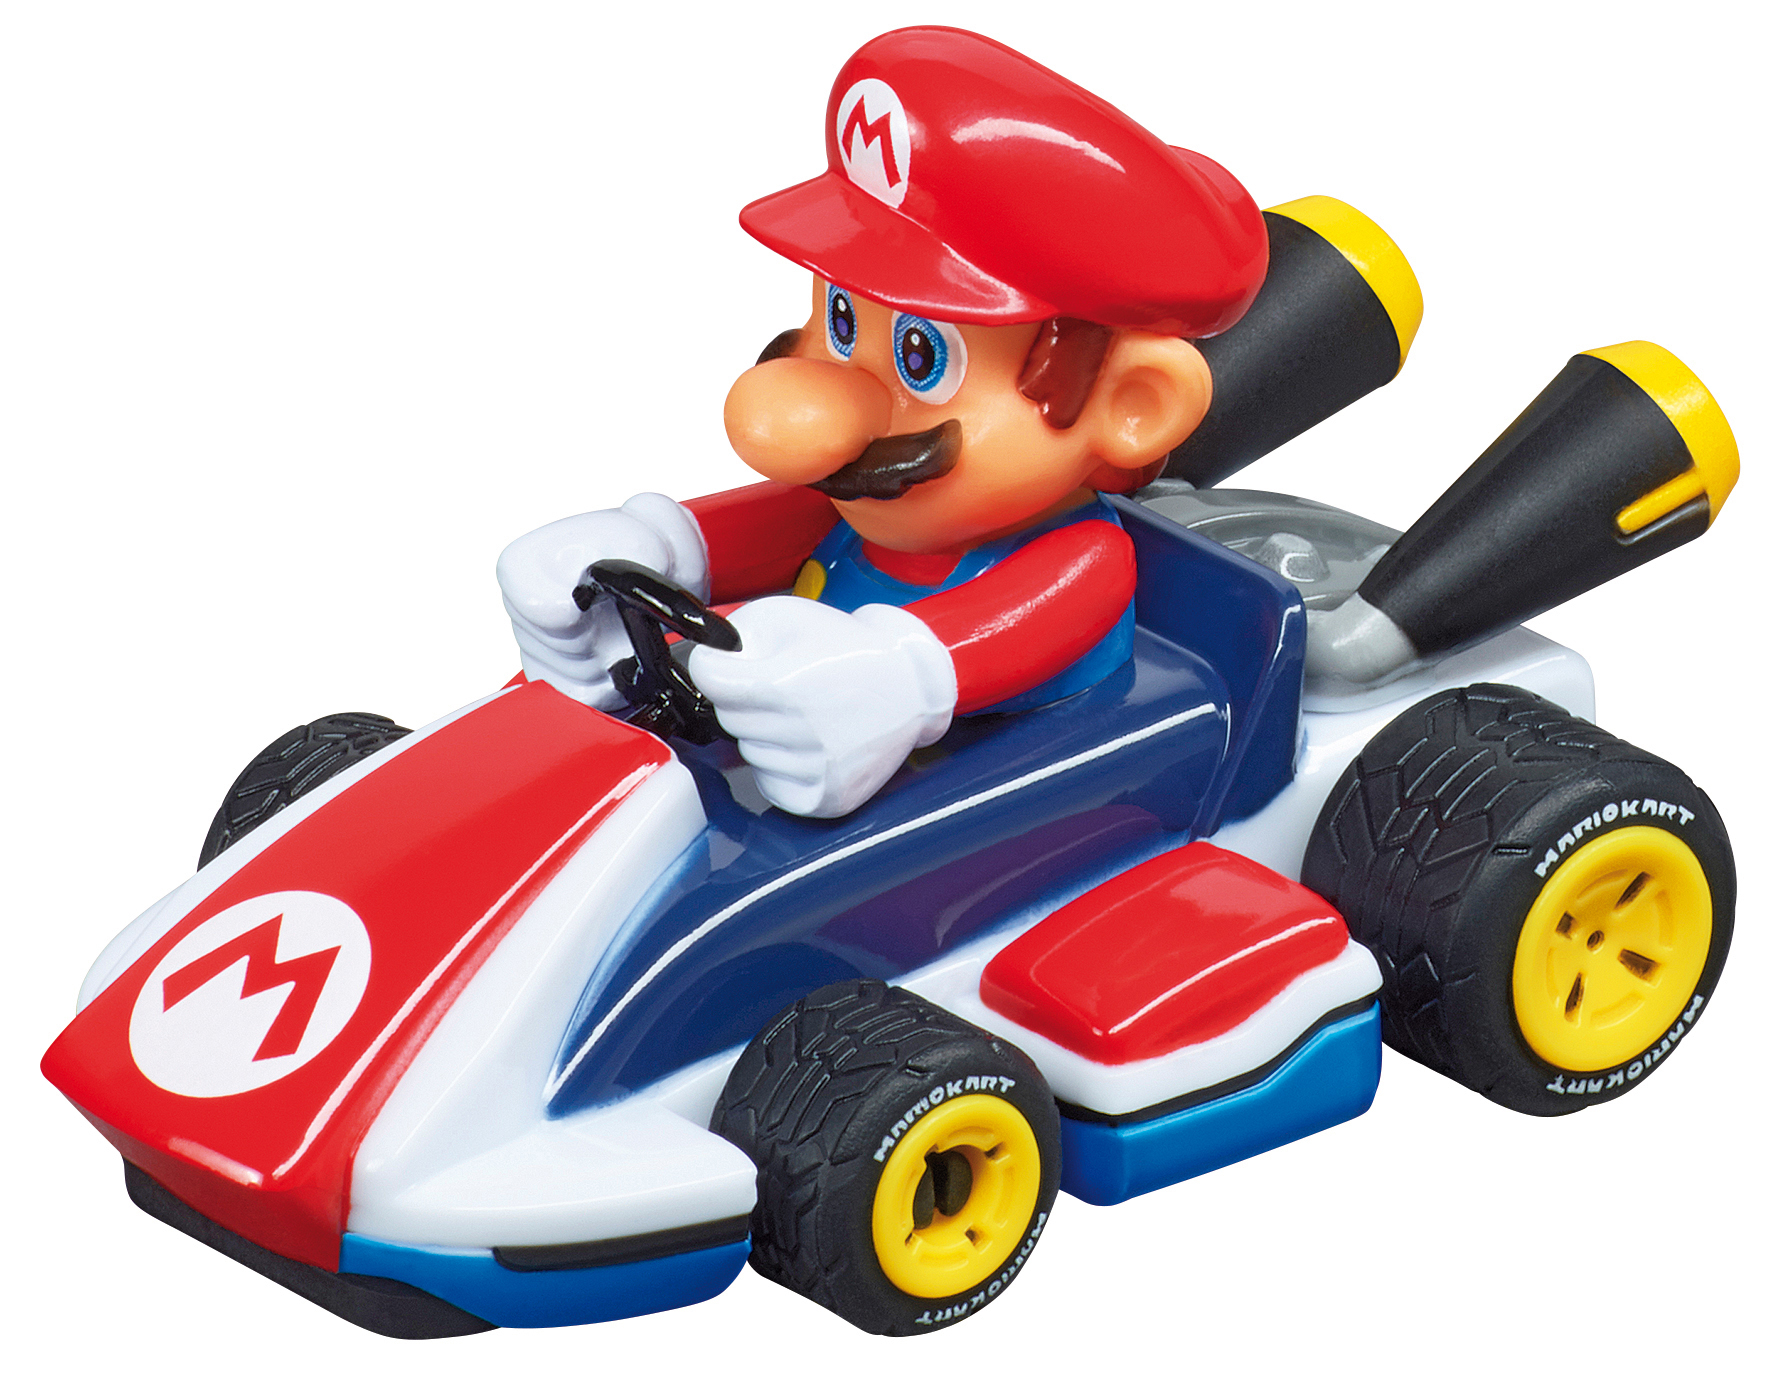 CARRERA (TOYS) First Nintendo Mario Rennbahn, Kart™ Mehrfarbig